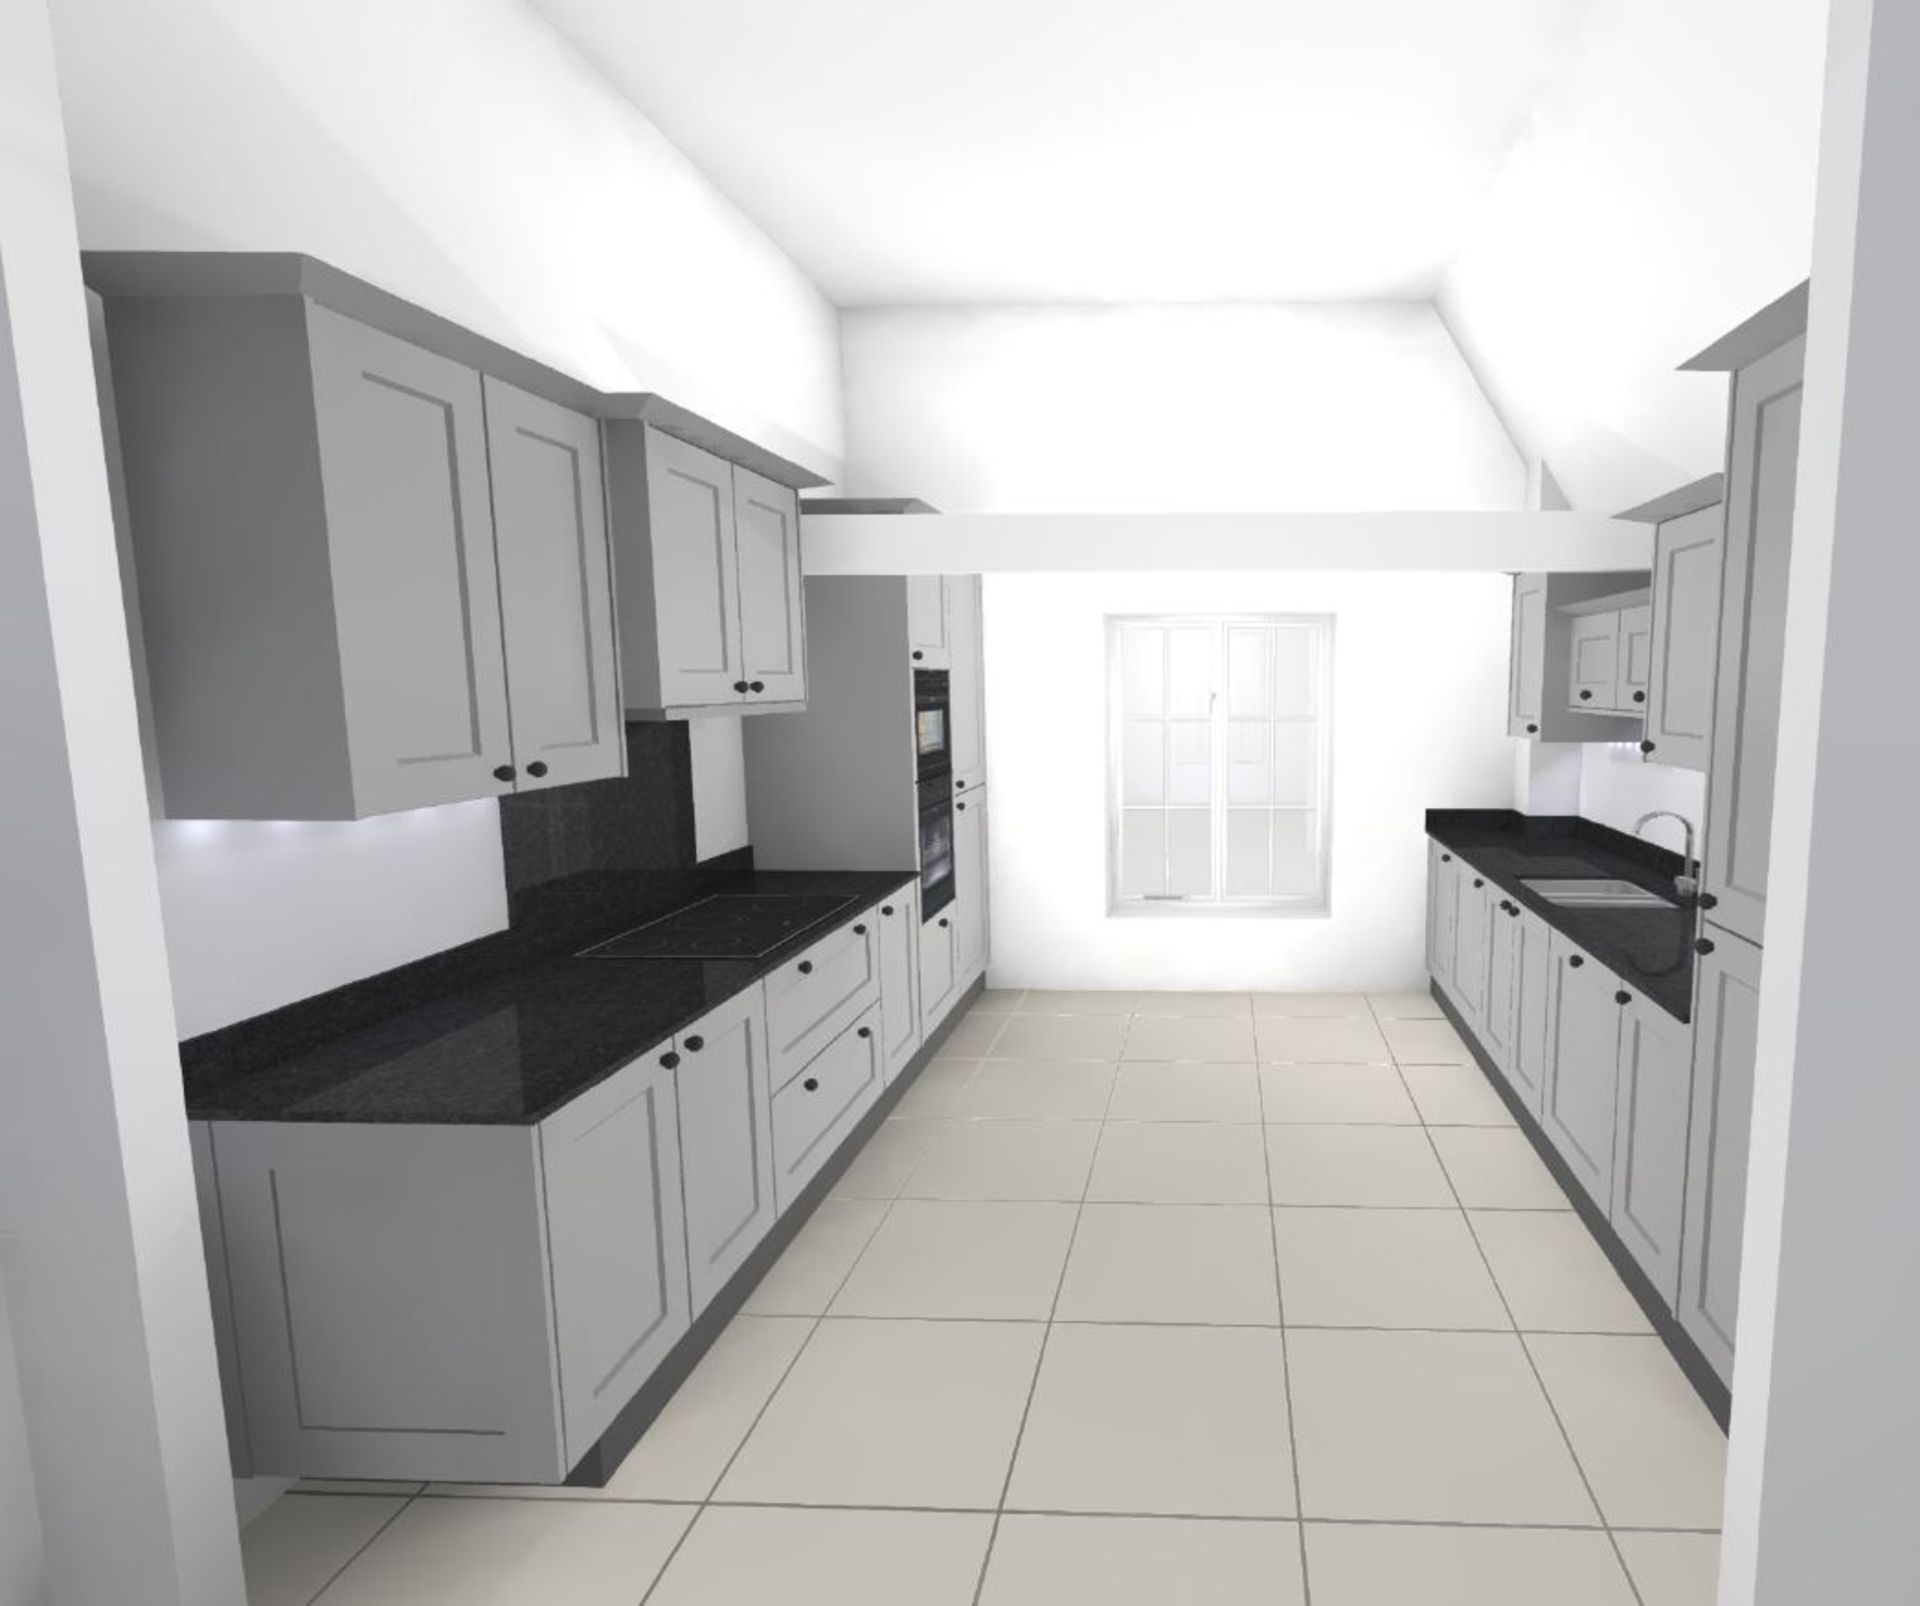 New/Unused Hatt kitchen comprising: Matt dove grey vinyl wrapped single piece shaker style doors,